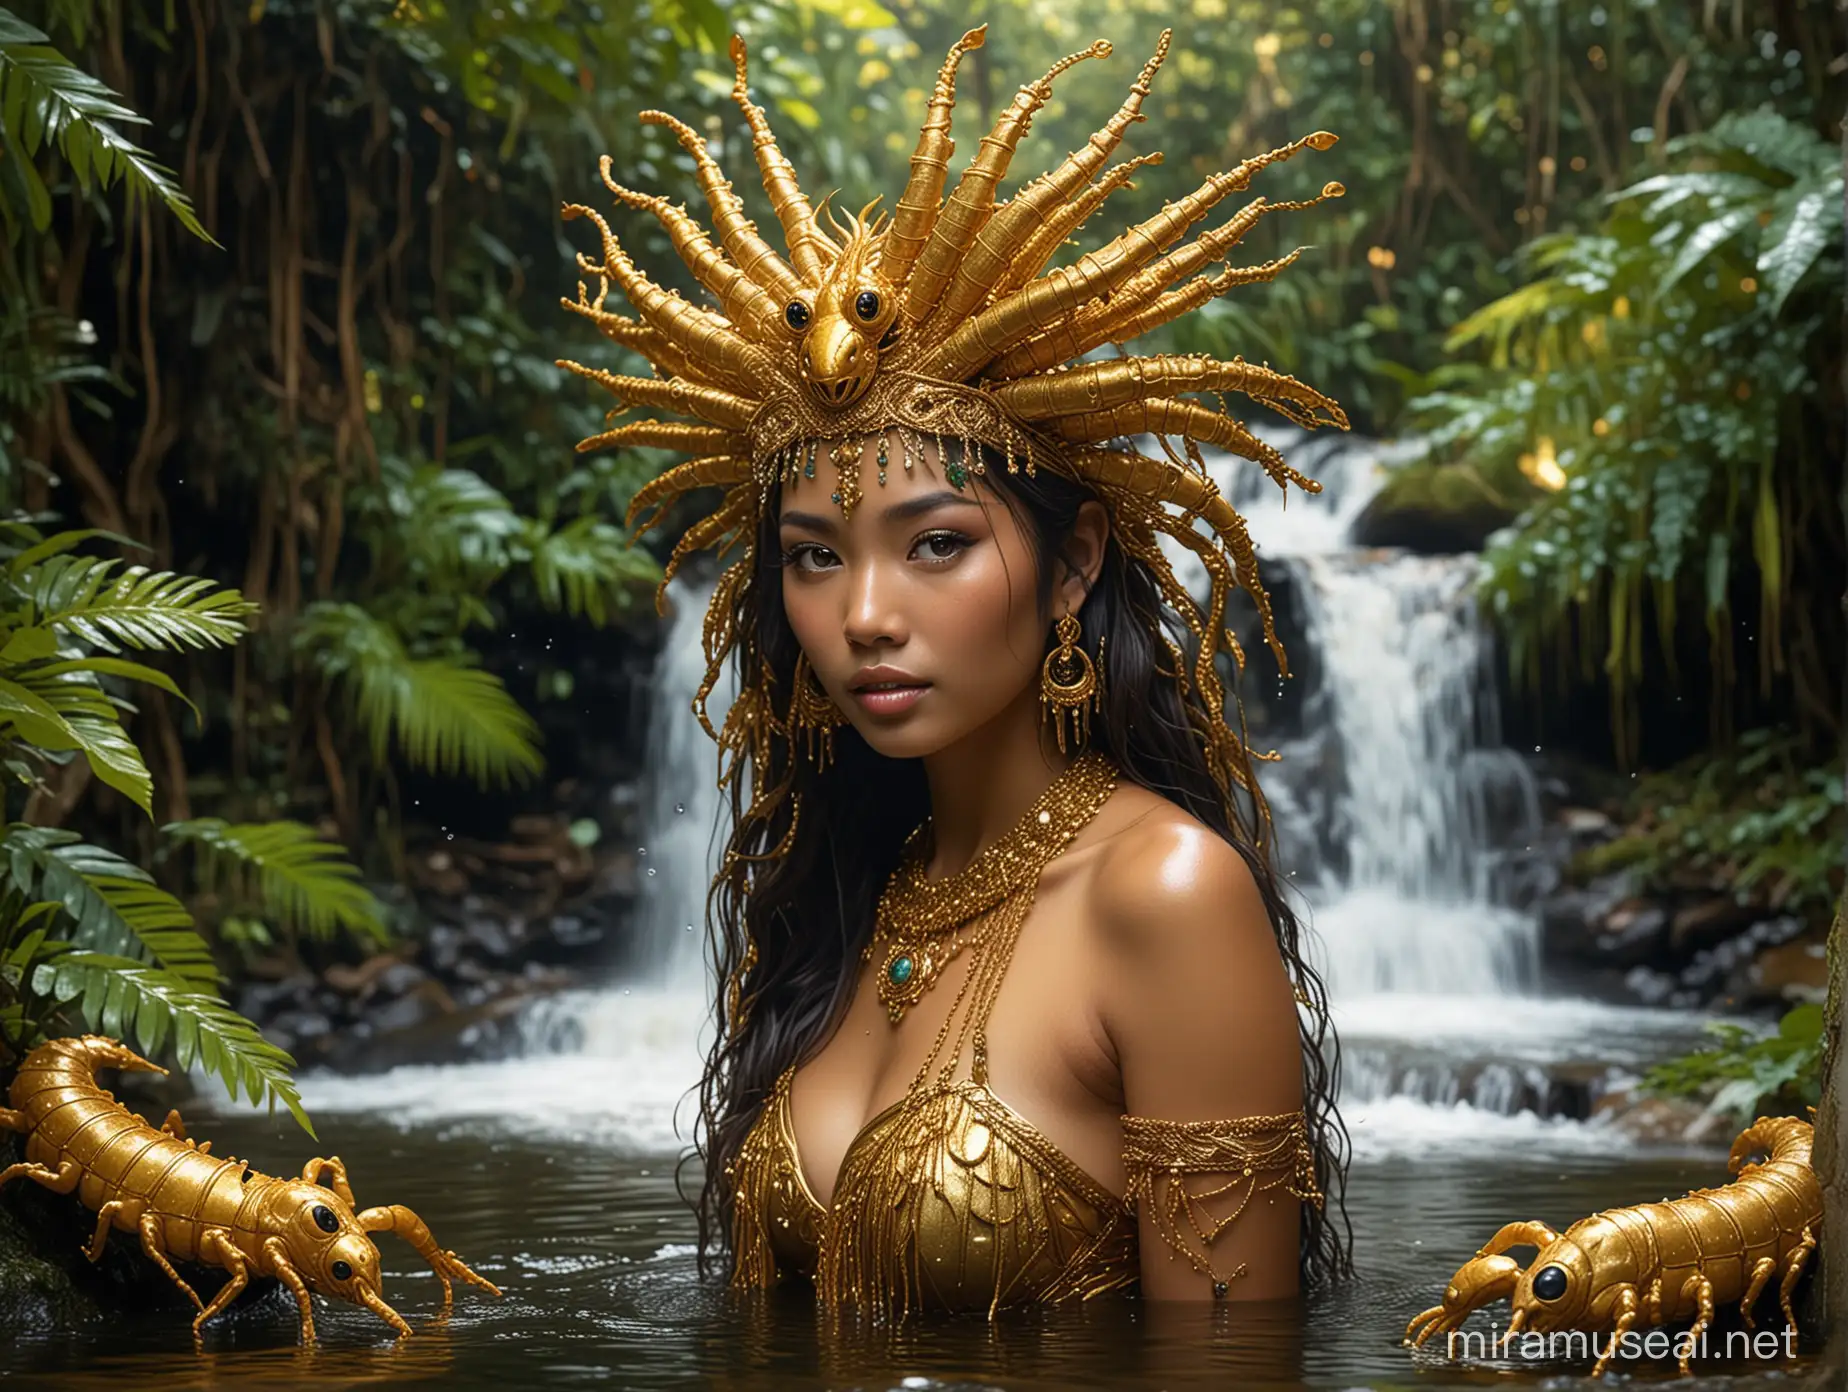 Golden Filipino Water Nymph Amidst Lush Waterfall Oasis